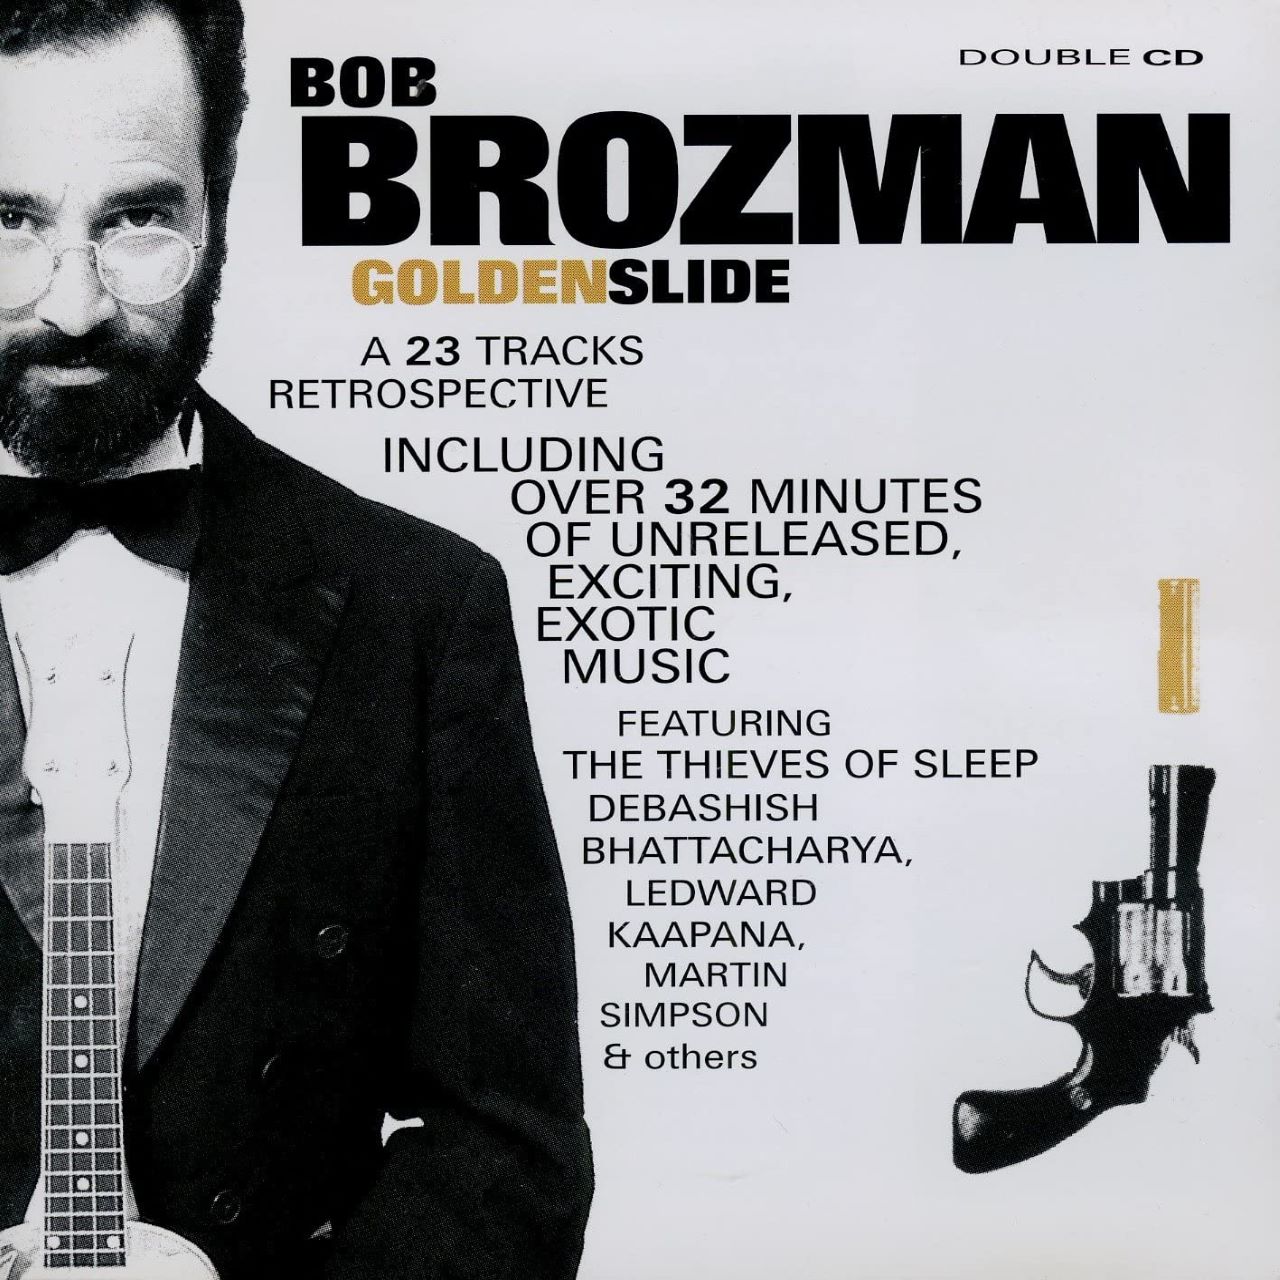 Bob Brozman - Golden Slide cover album